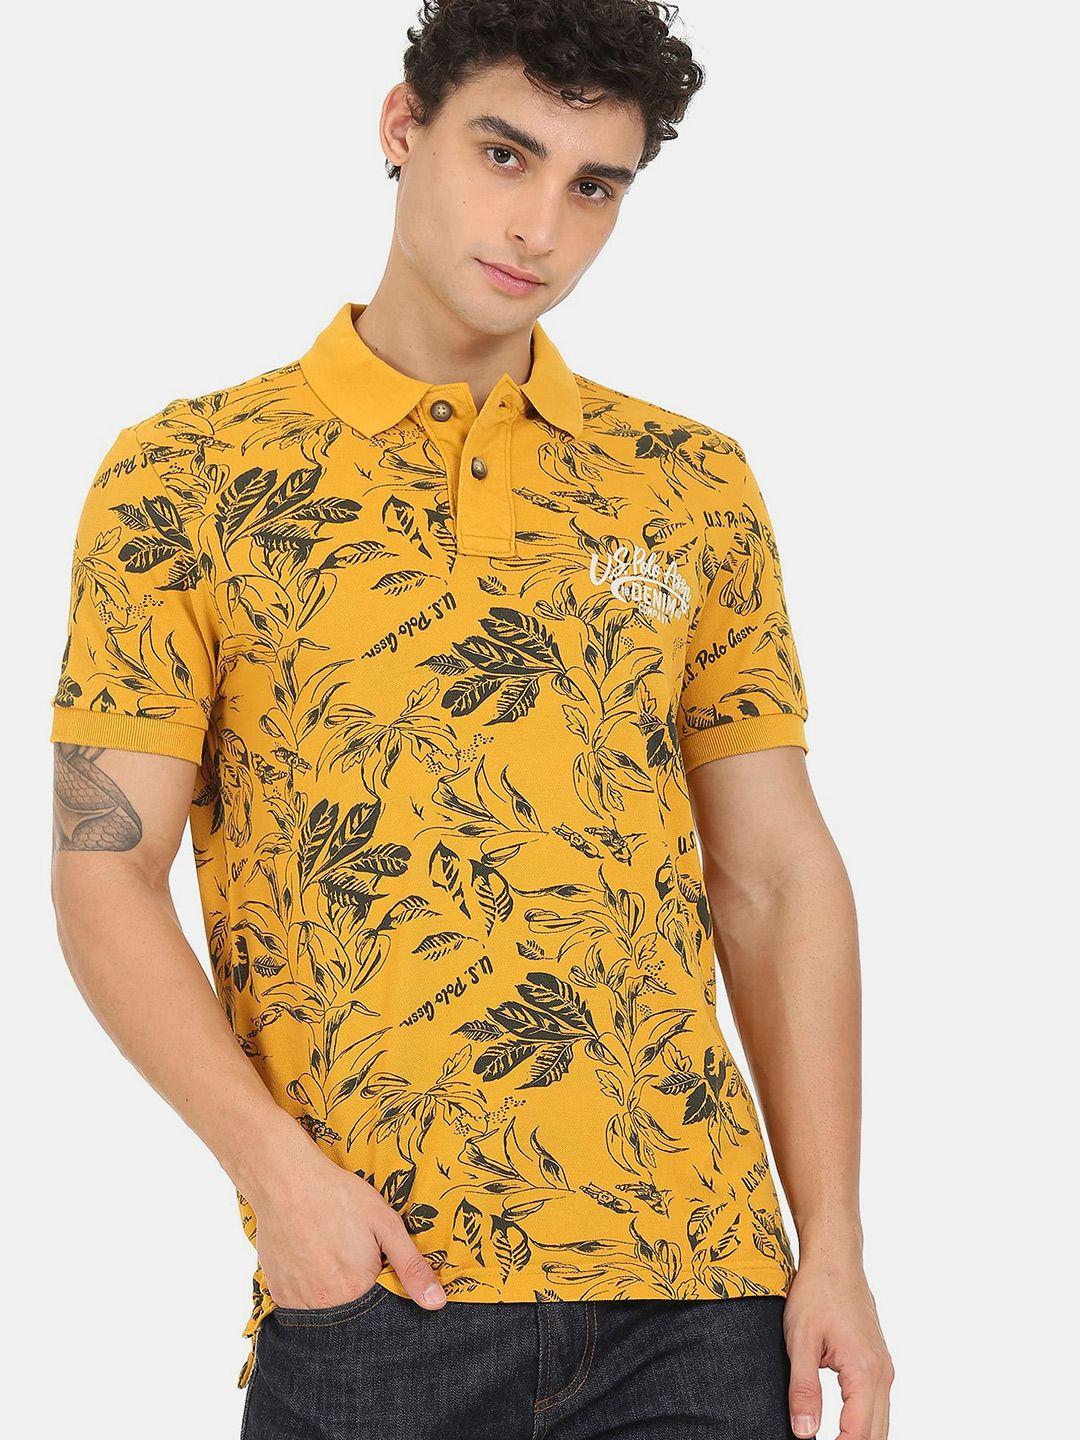 u s polo assn denim co men yellow floral printed cotton t-shirt